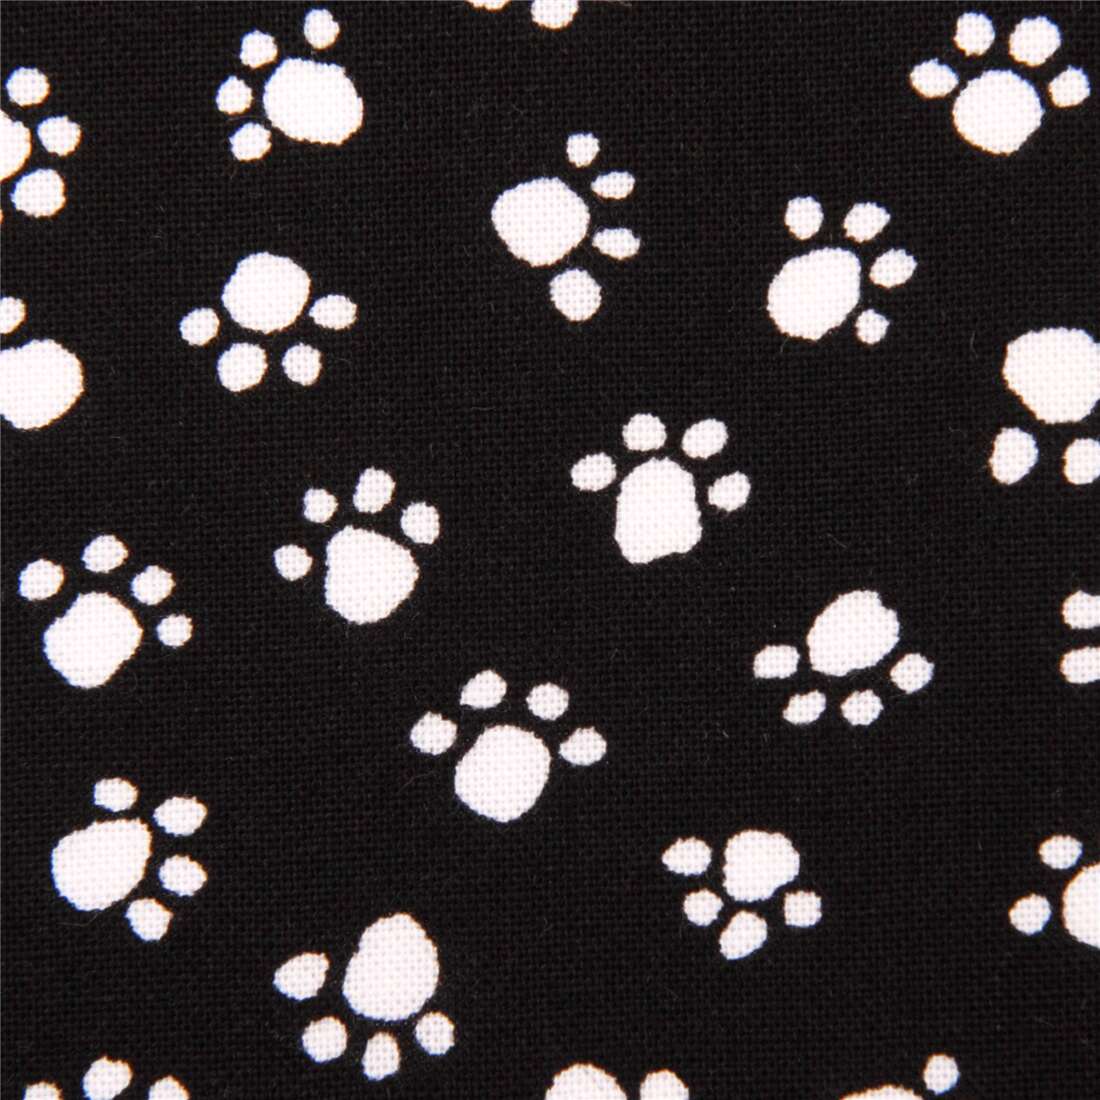 black dog paw fabric 'Paw Prints' by Michael Miller - modeS4u